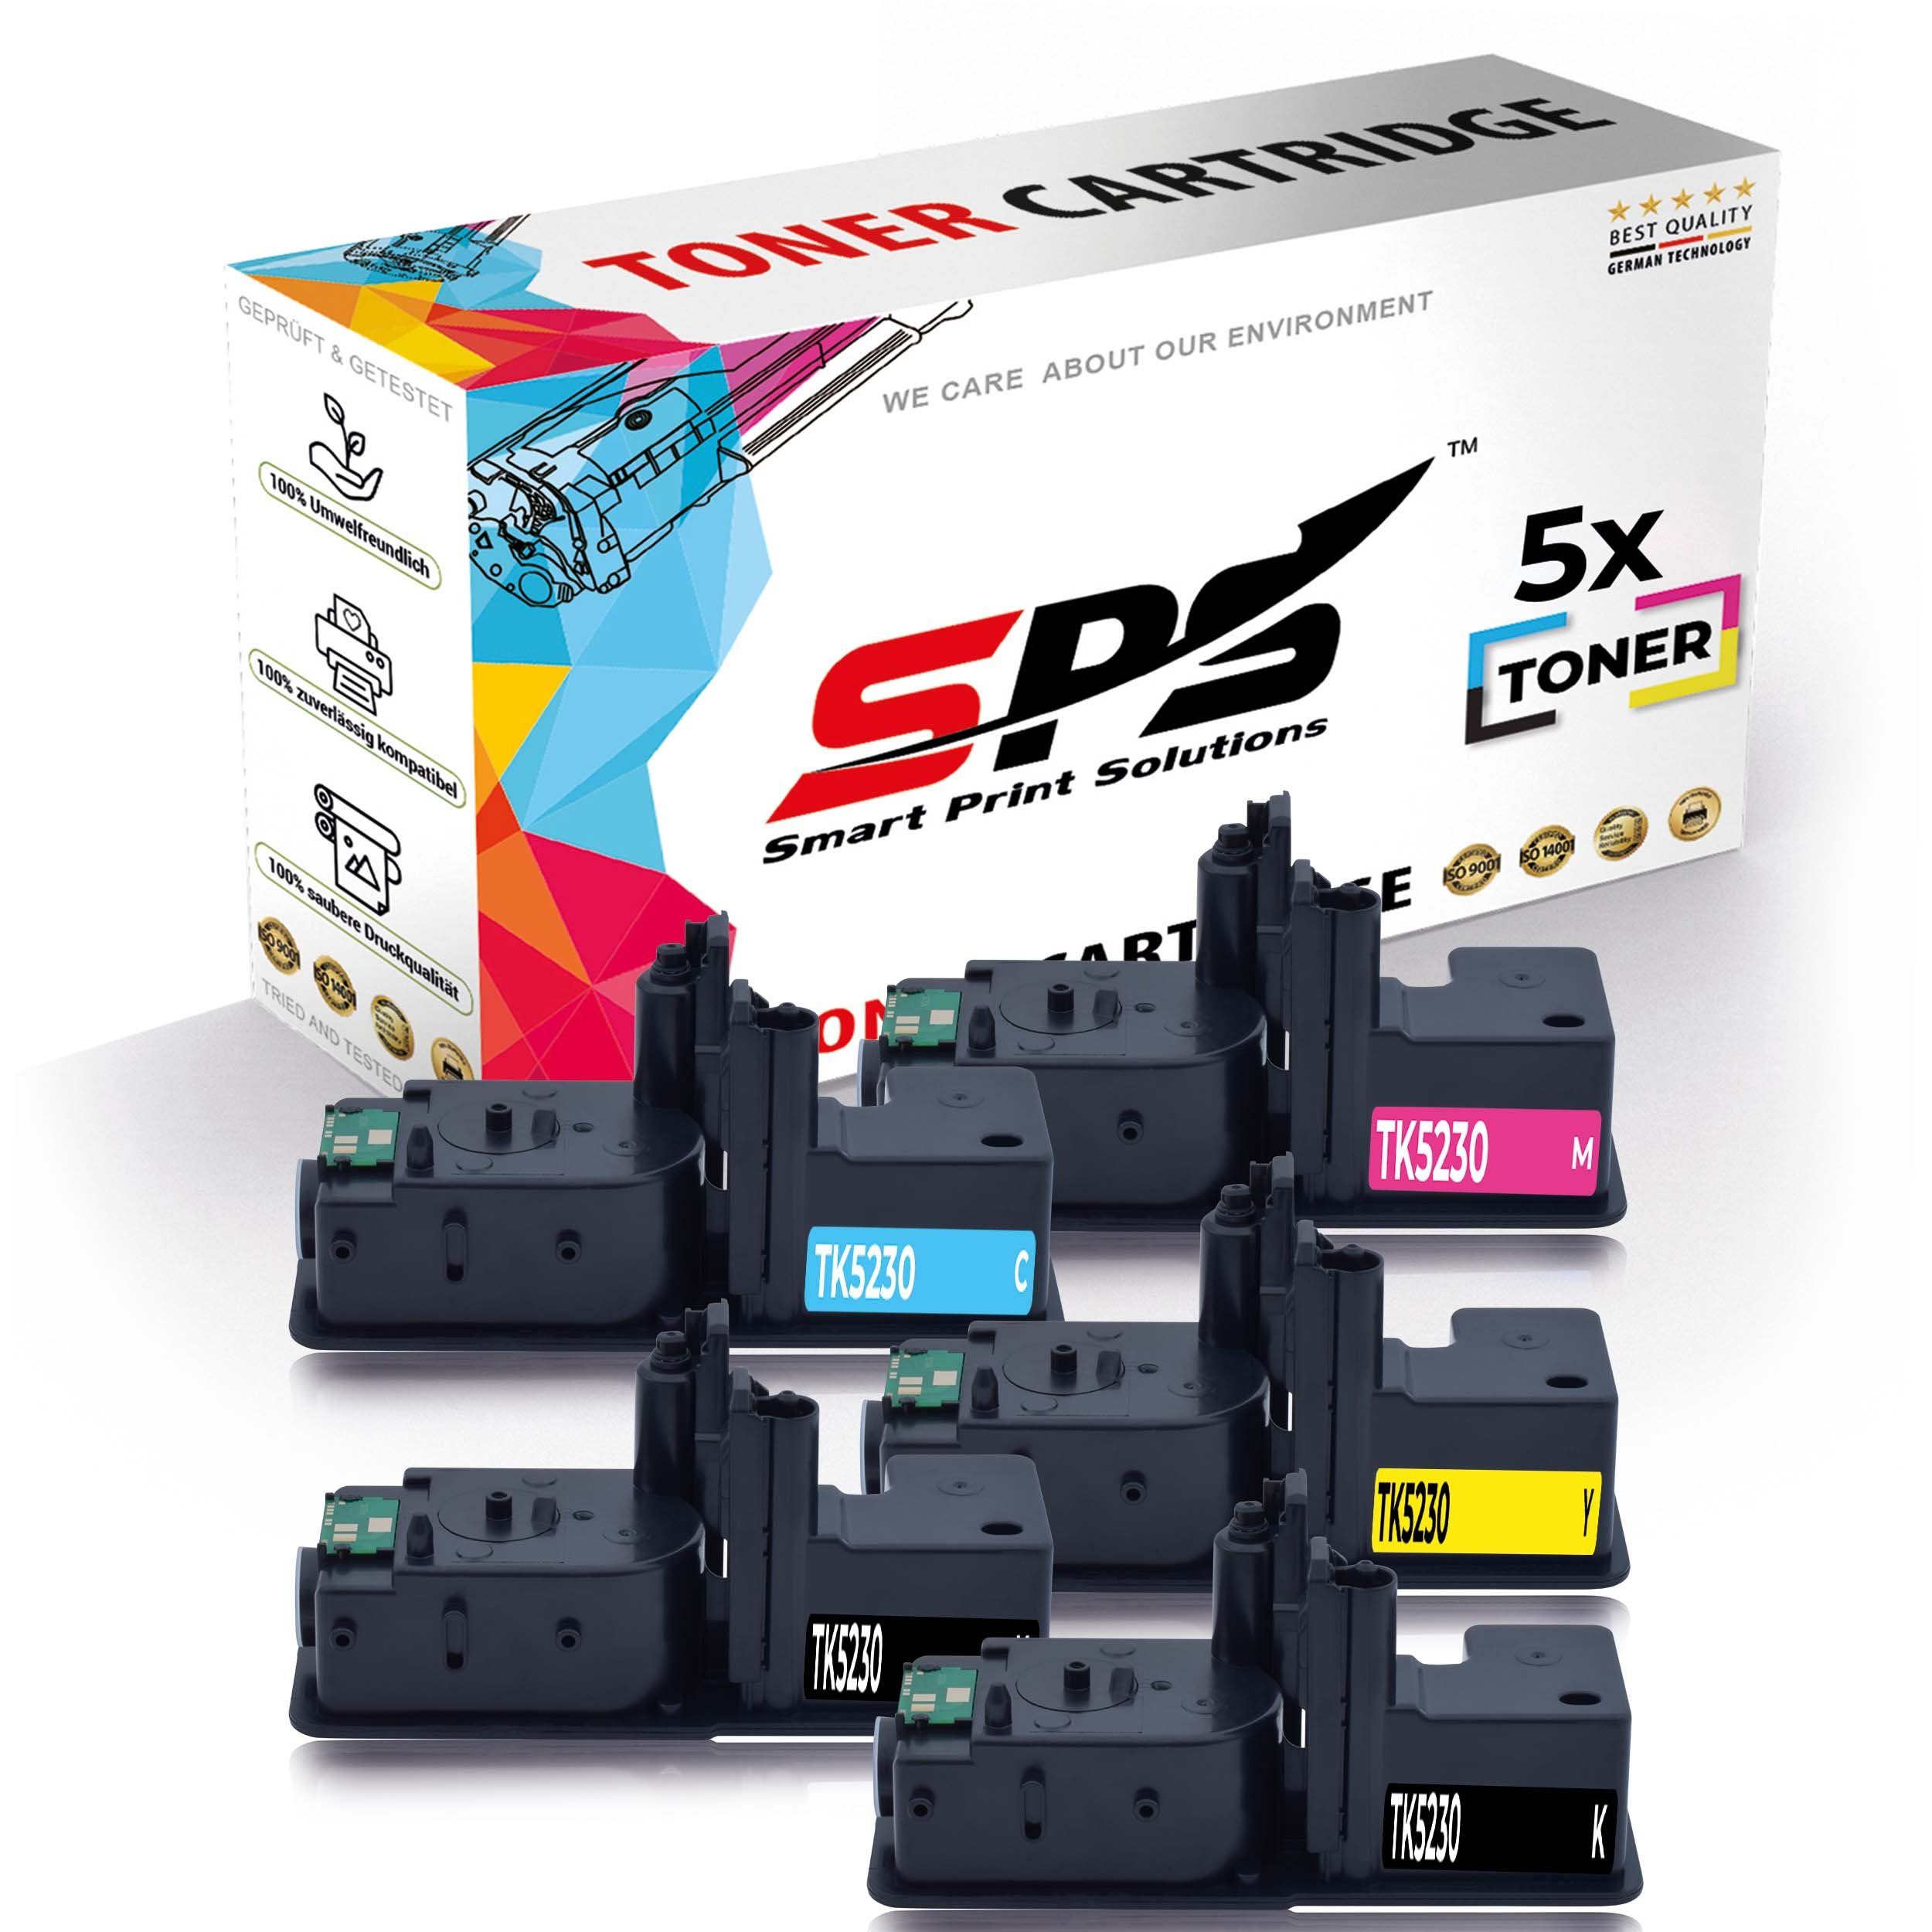 SPS Tonerkartusche 5x Multipack Set Kompatibel für Kyocera ECOSYS M, (5er Pack, 5x Toner) | Tonerpatronen